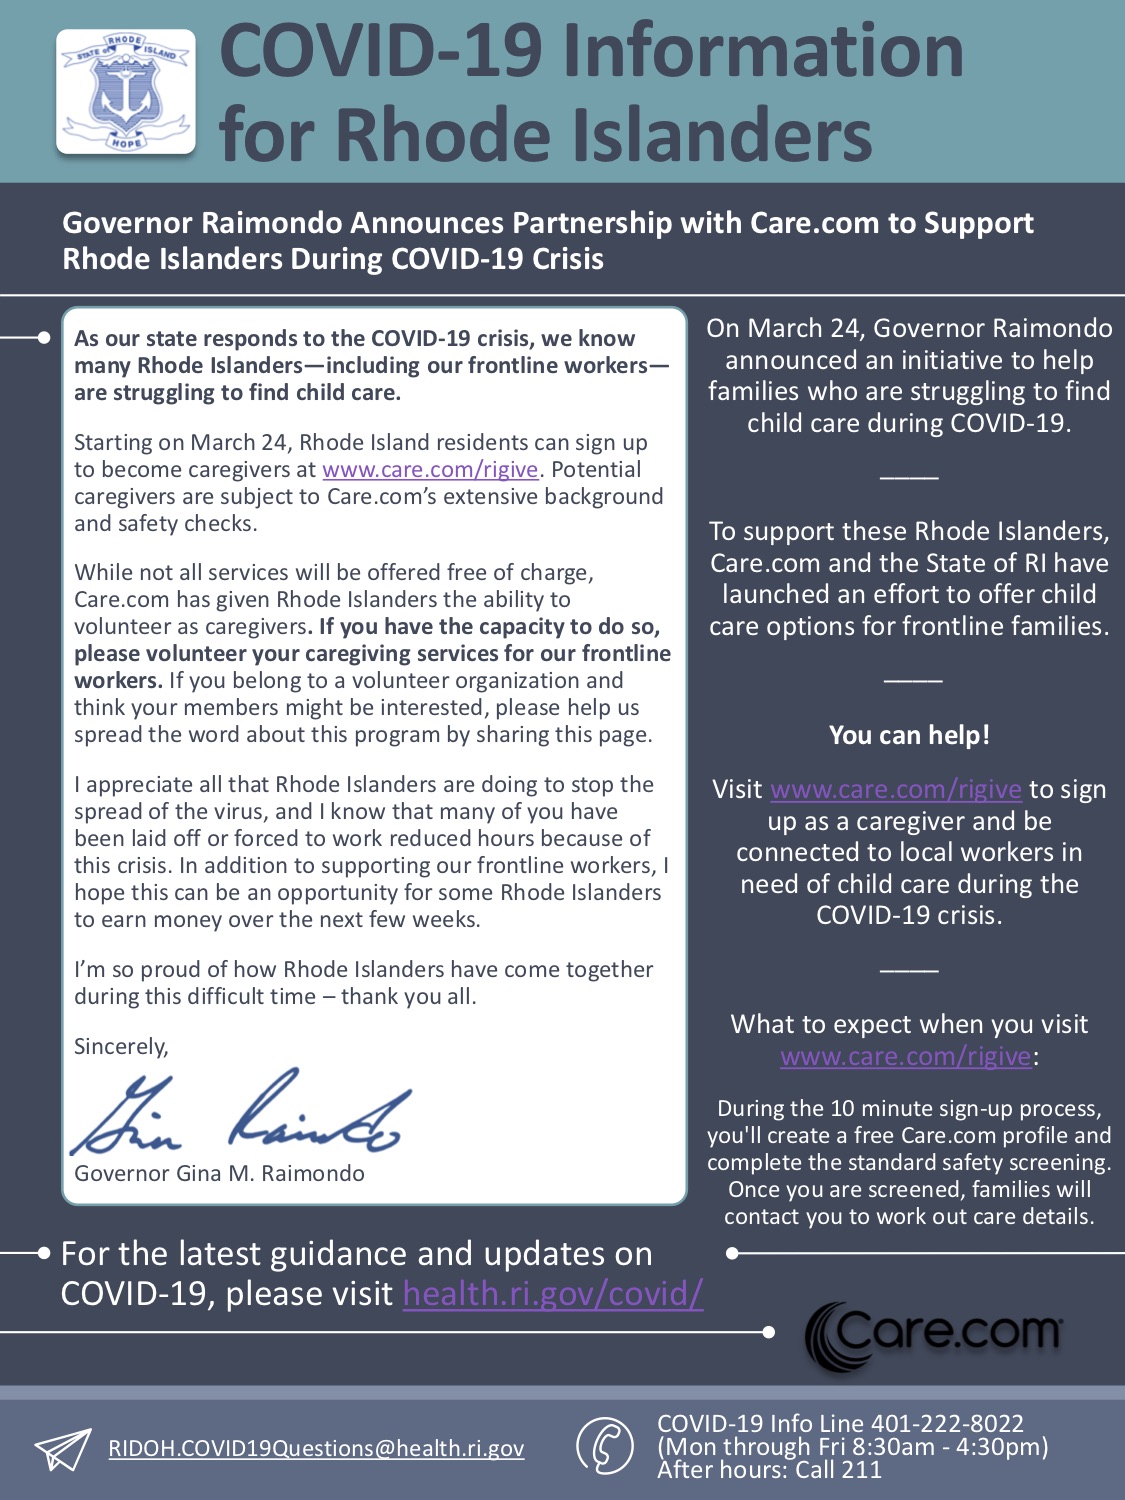 Governor Raimondo Announces Partnership with Care.com to Support Rhode Islanders During COVID-19 Crisis